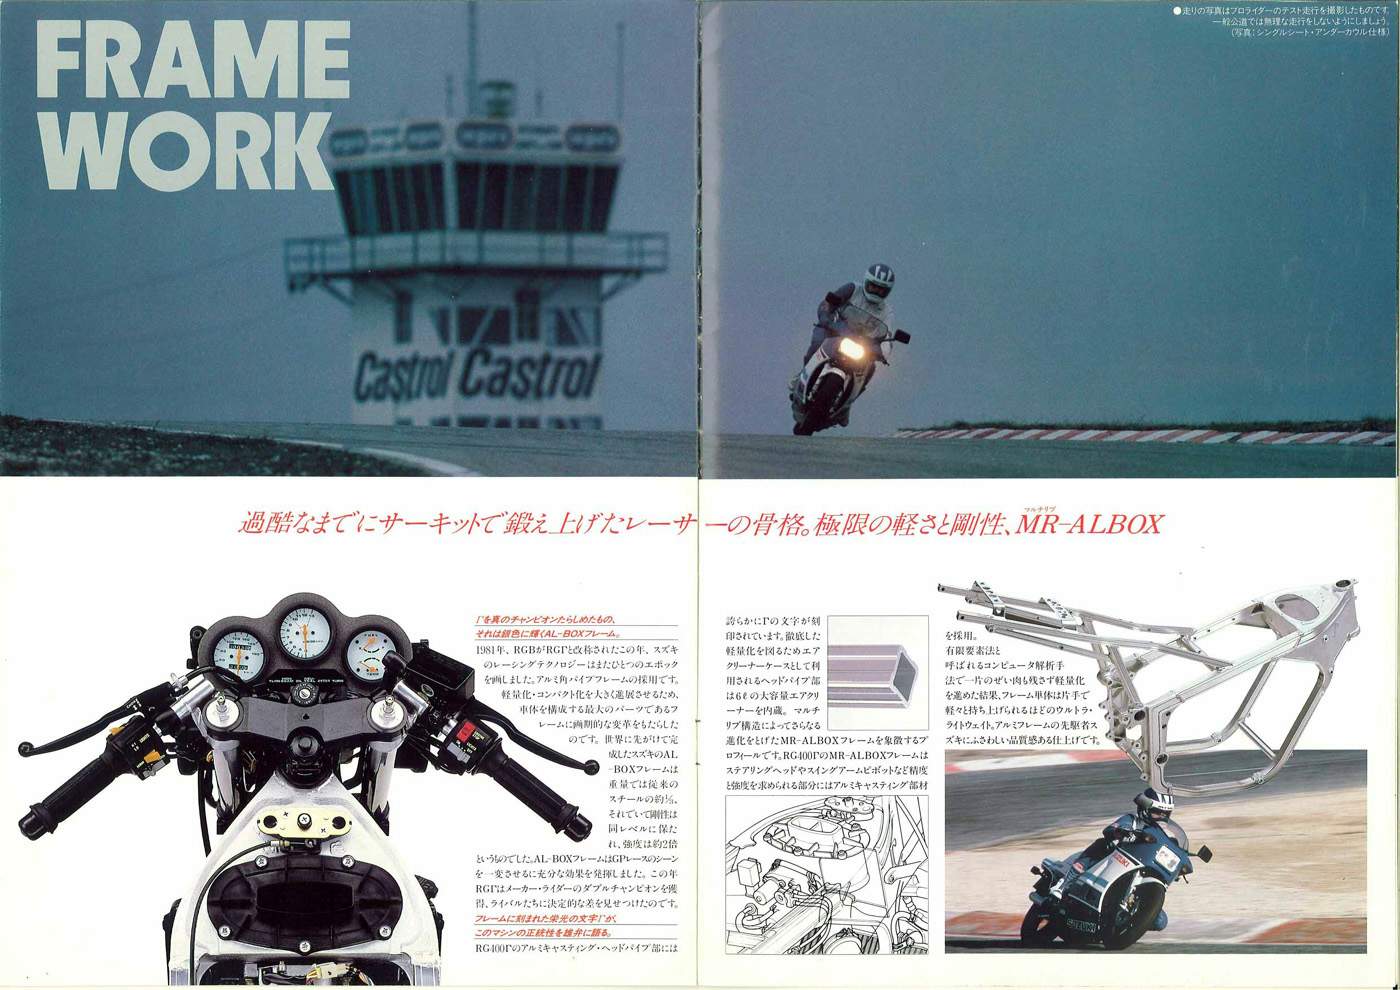 Мотоцикл Suzuki RG 400 1985 фото